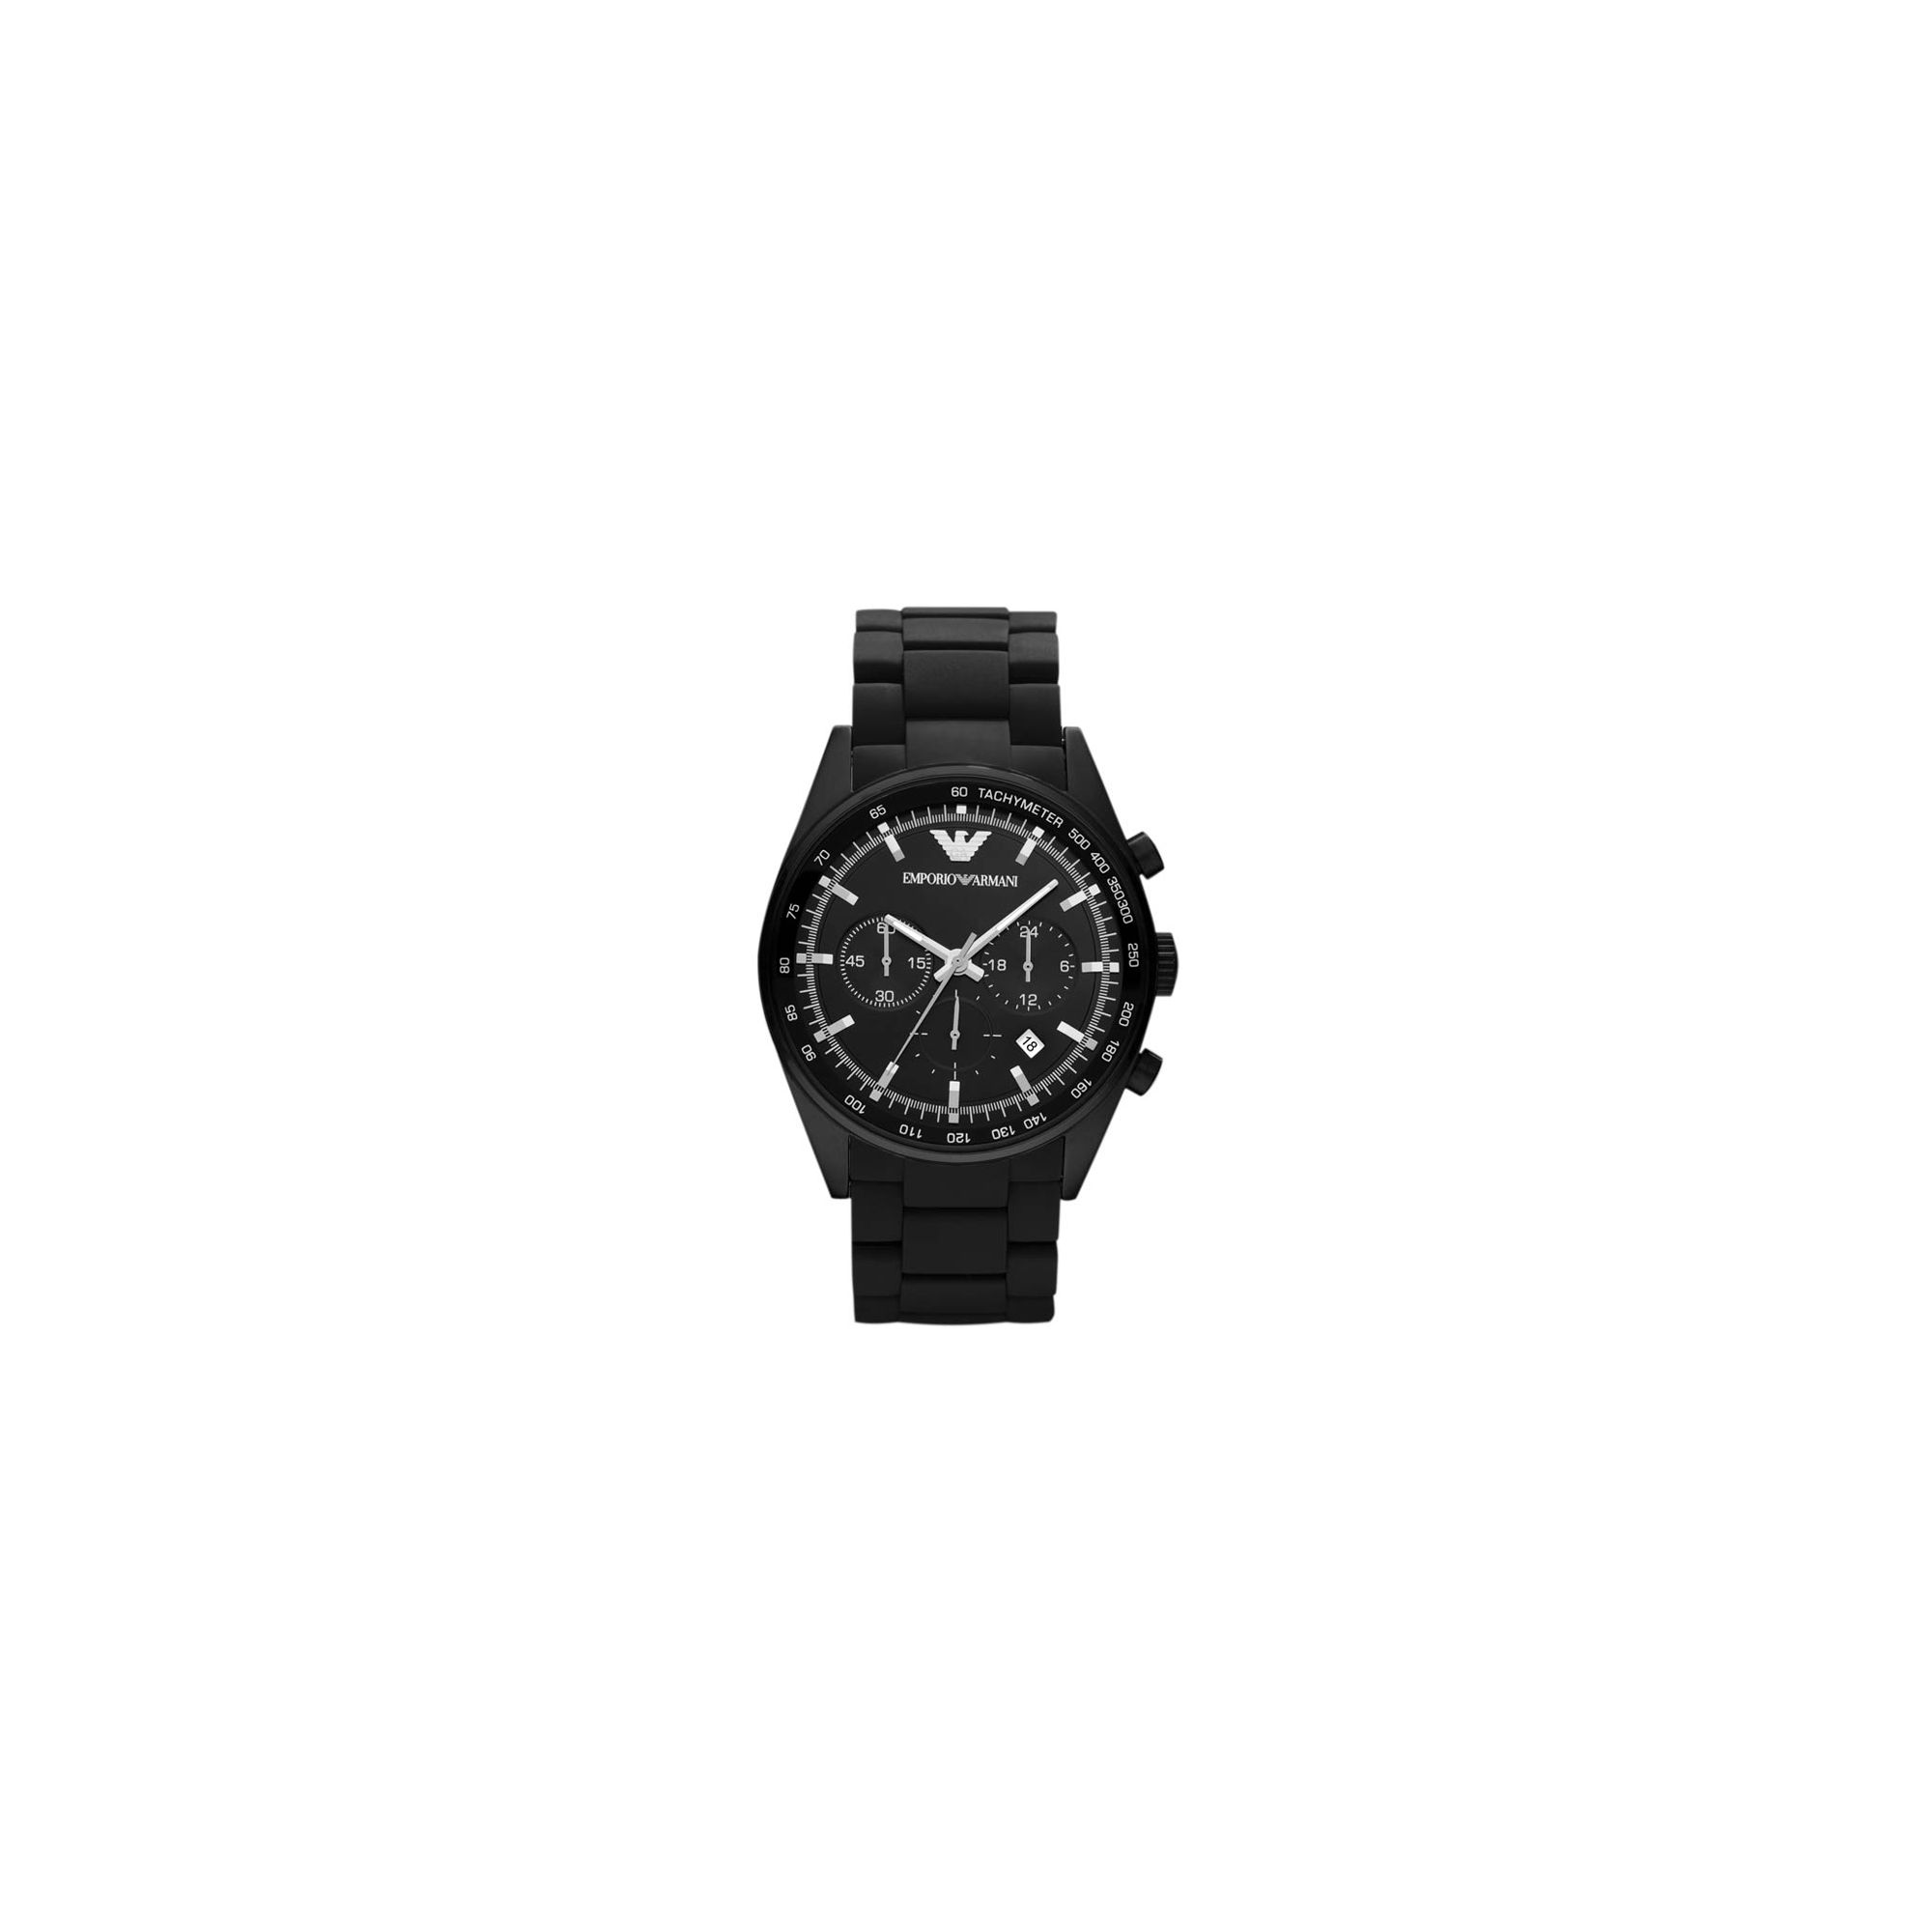 Emporio Armani Black Rubber Strap Chrono Watch AR5981 at Tesco Direct